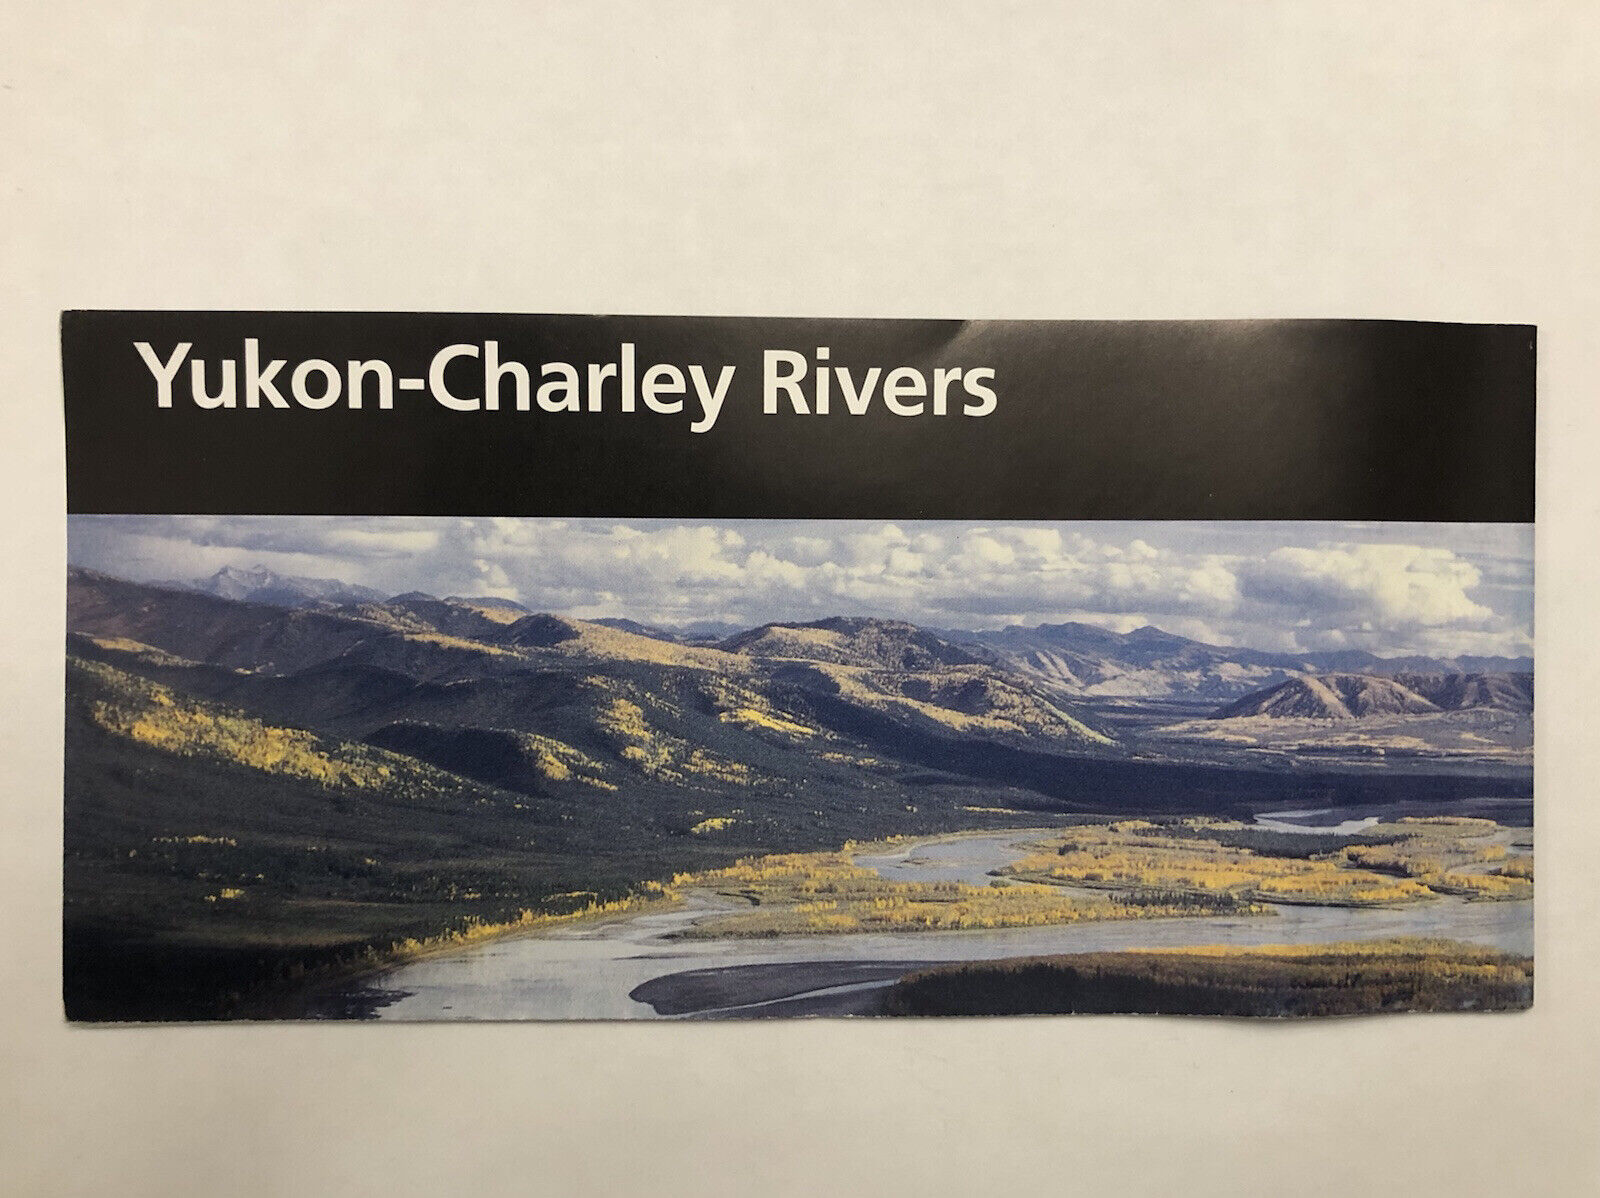 Yukon Charley Rivers National Preserve Park Newest Version Unigrid Brochure Map